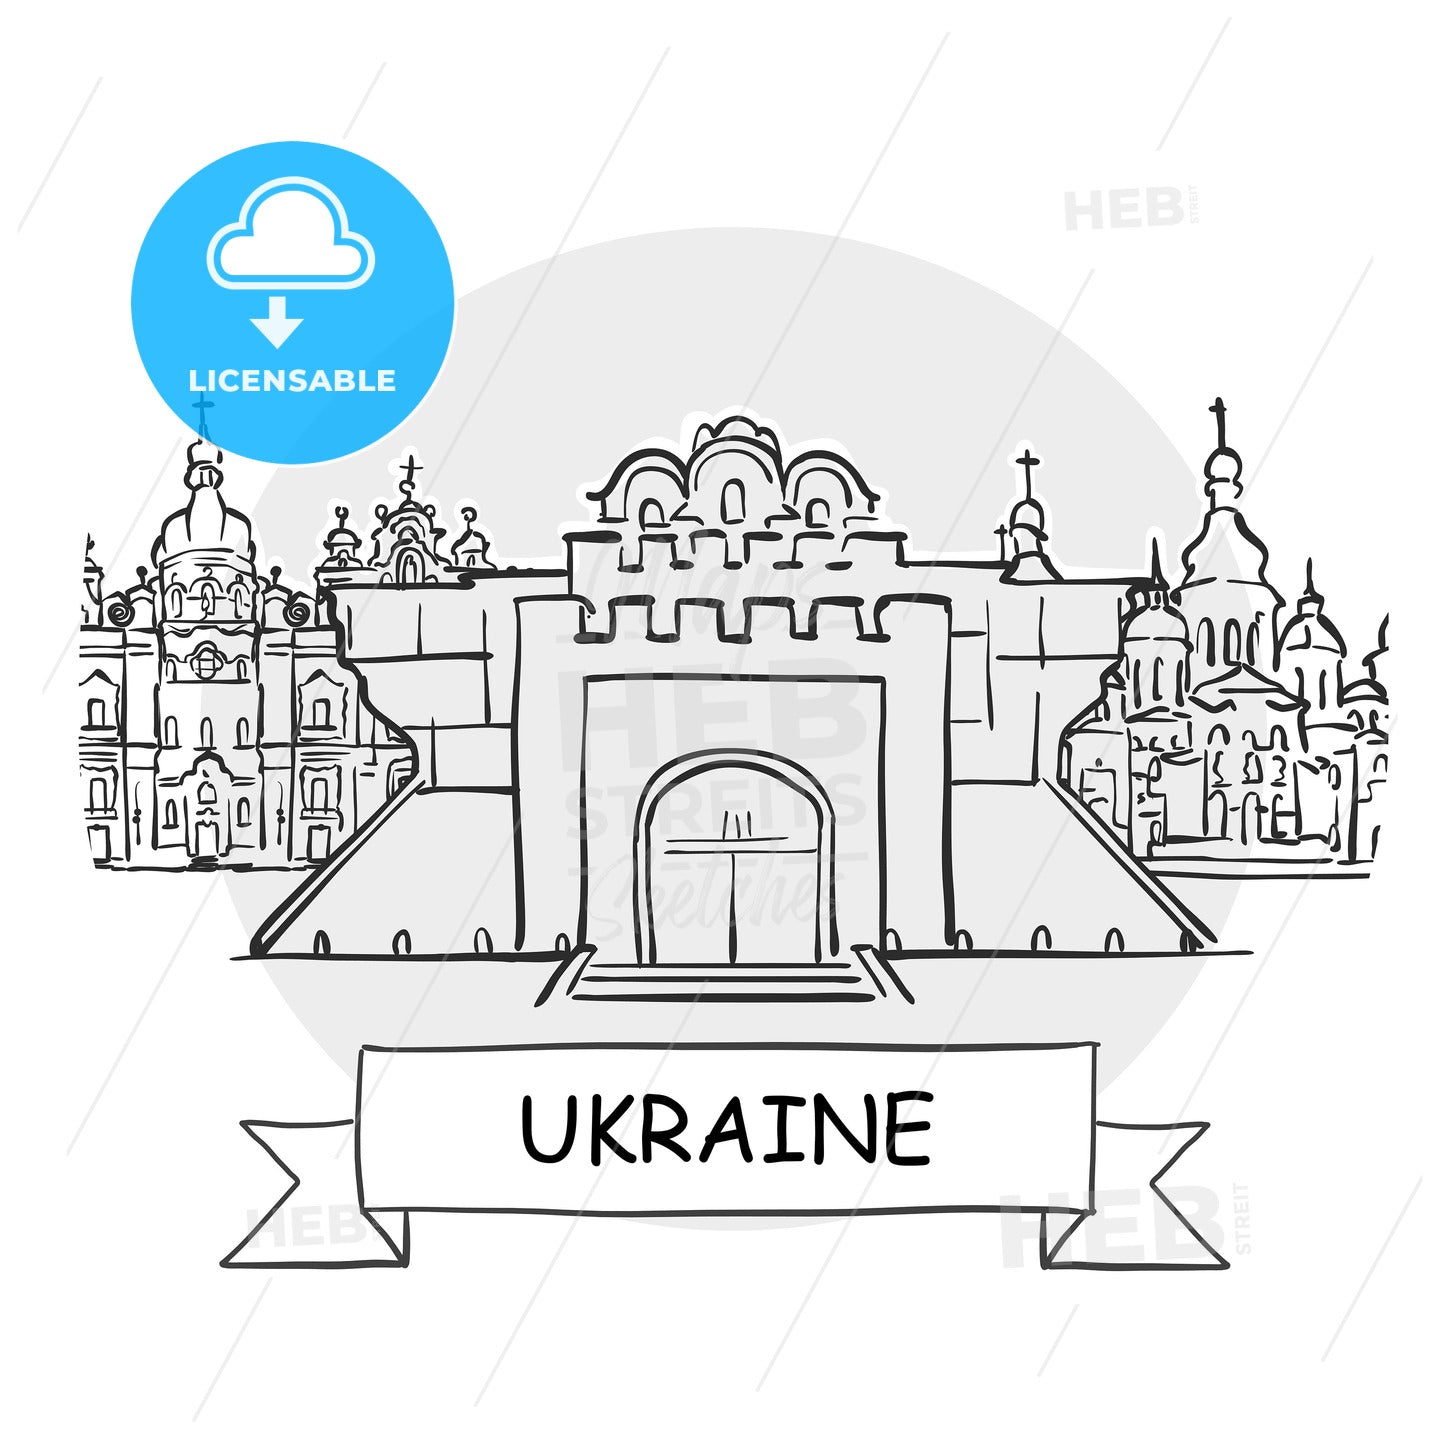 Ukraine hand-drawn urban vector sign – instant download